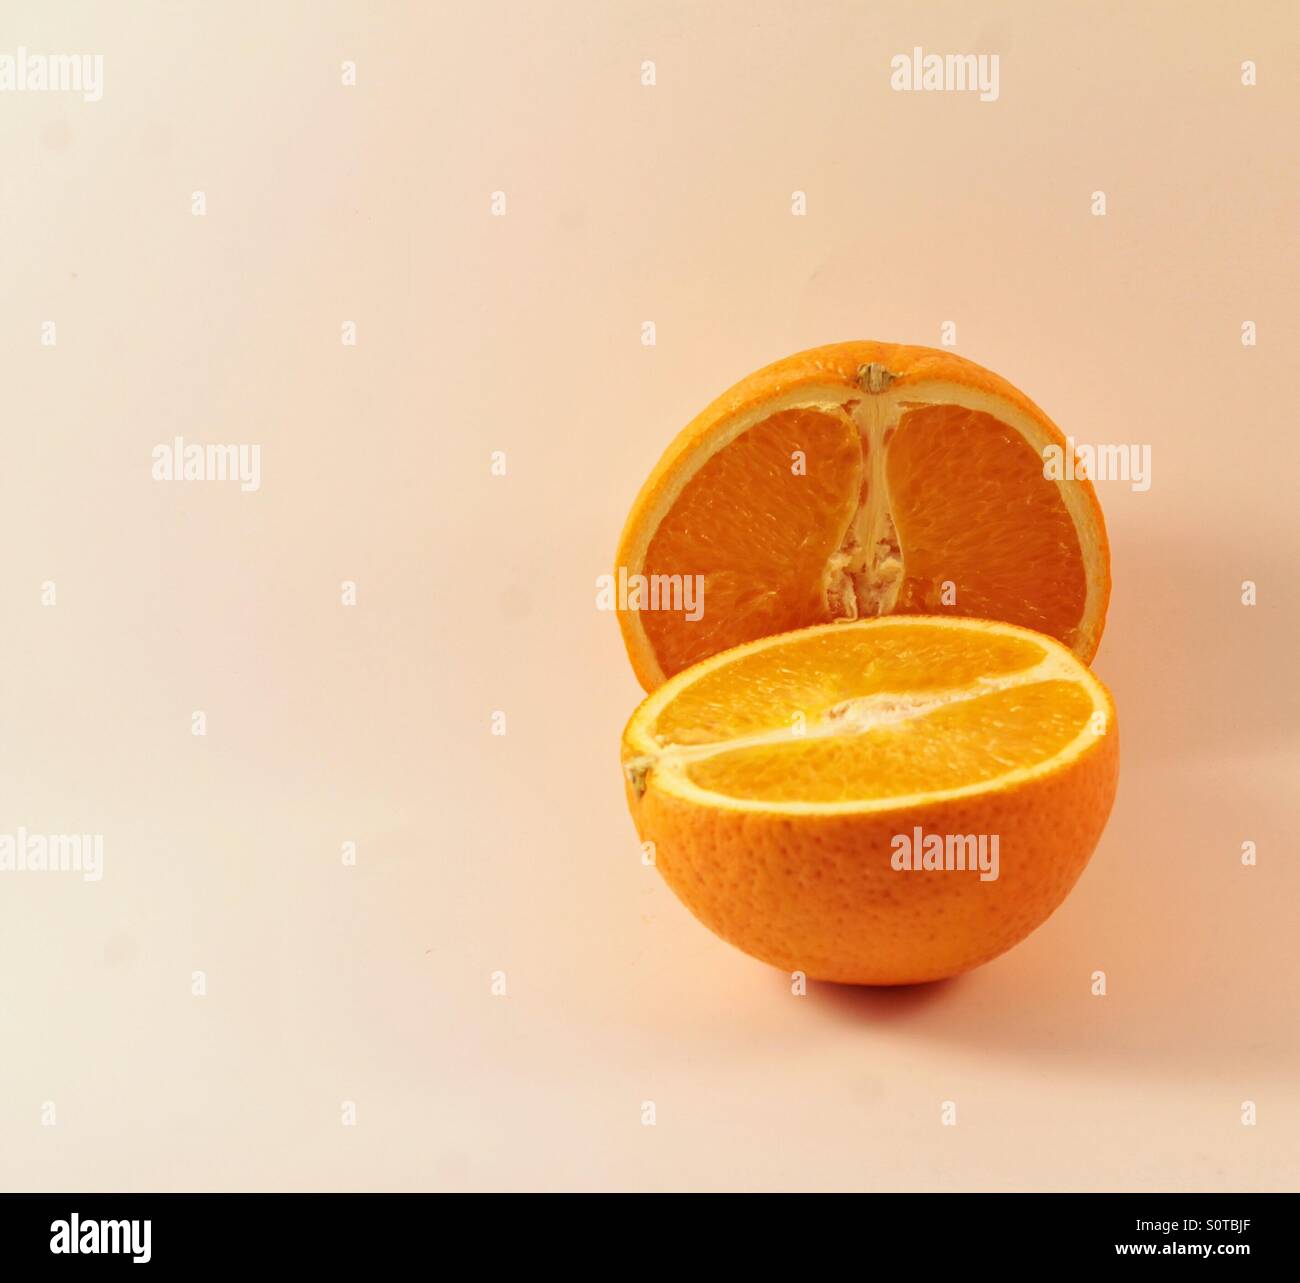 Dos medias naranjas fotografías e imágenes de alta resolución - Alamy